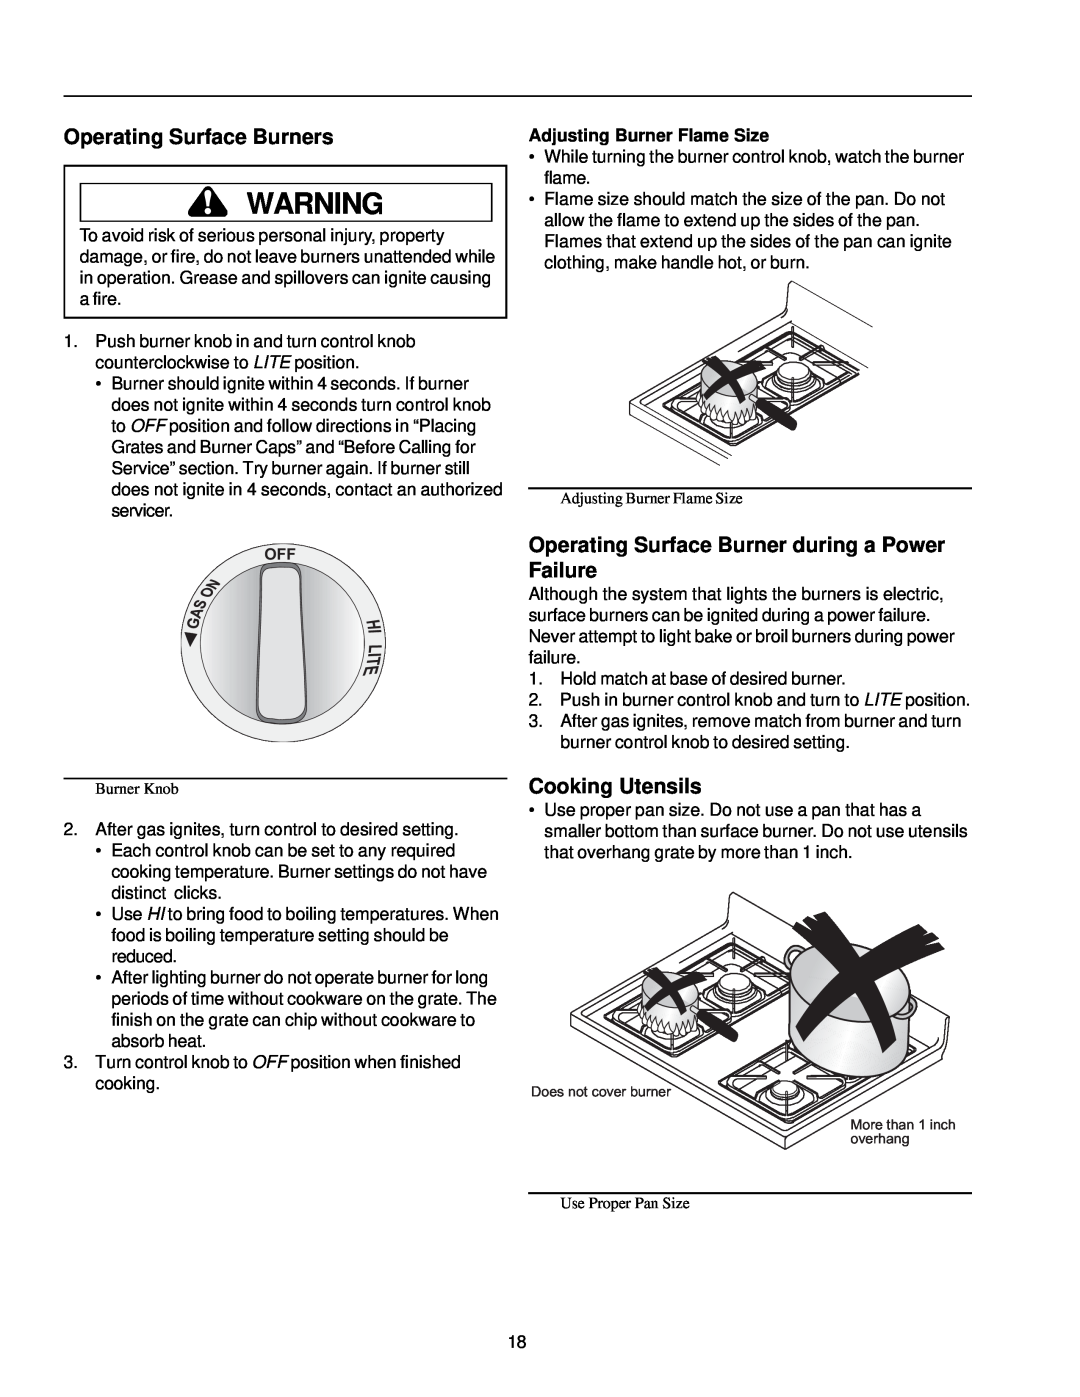 Amana ARG7302 manual Operating Surface Burners, Operating Surface Burner during a Power Failure, Cooking Utensils 